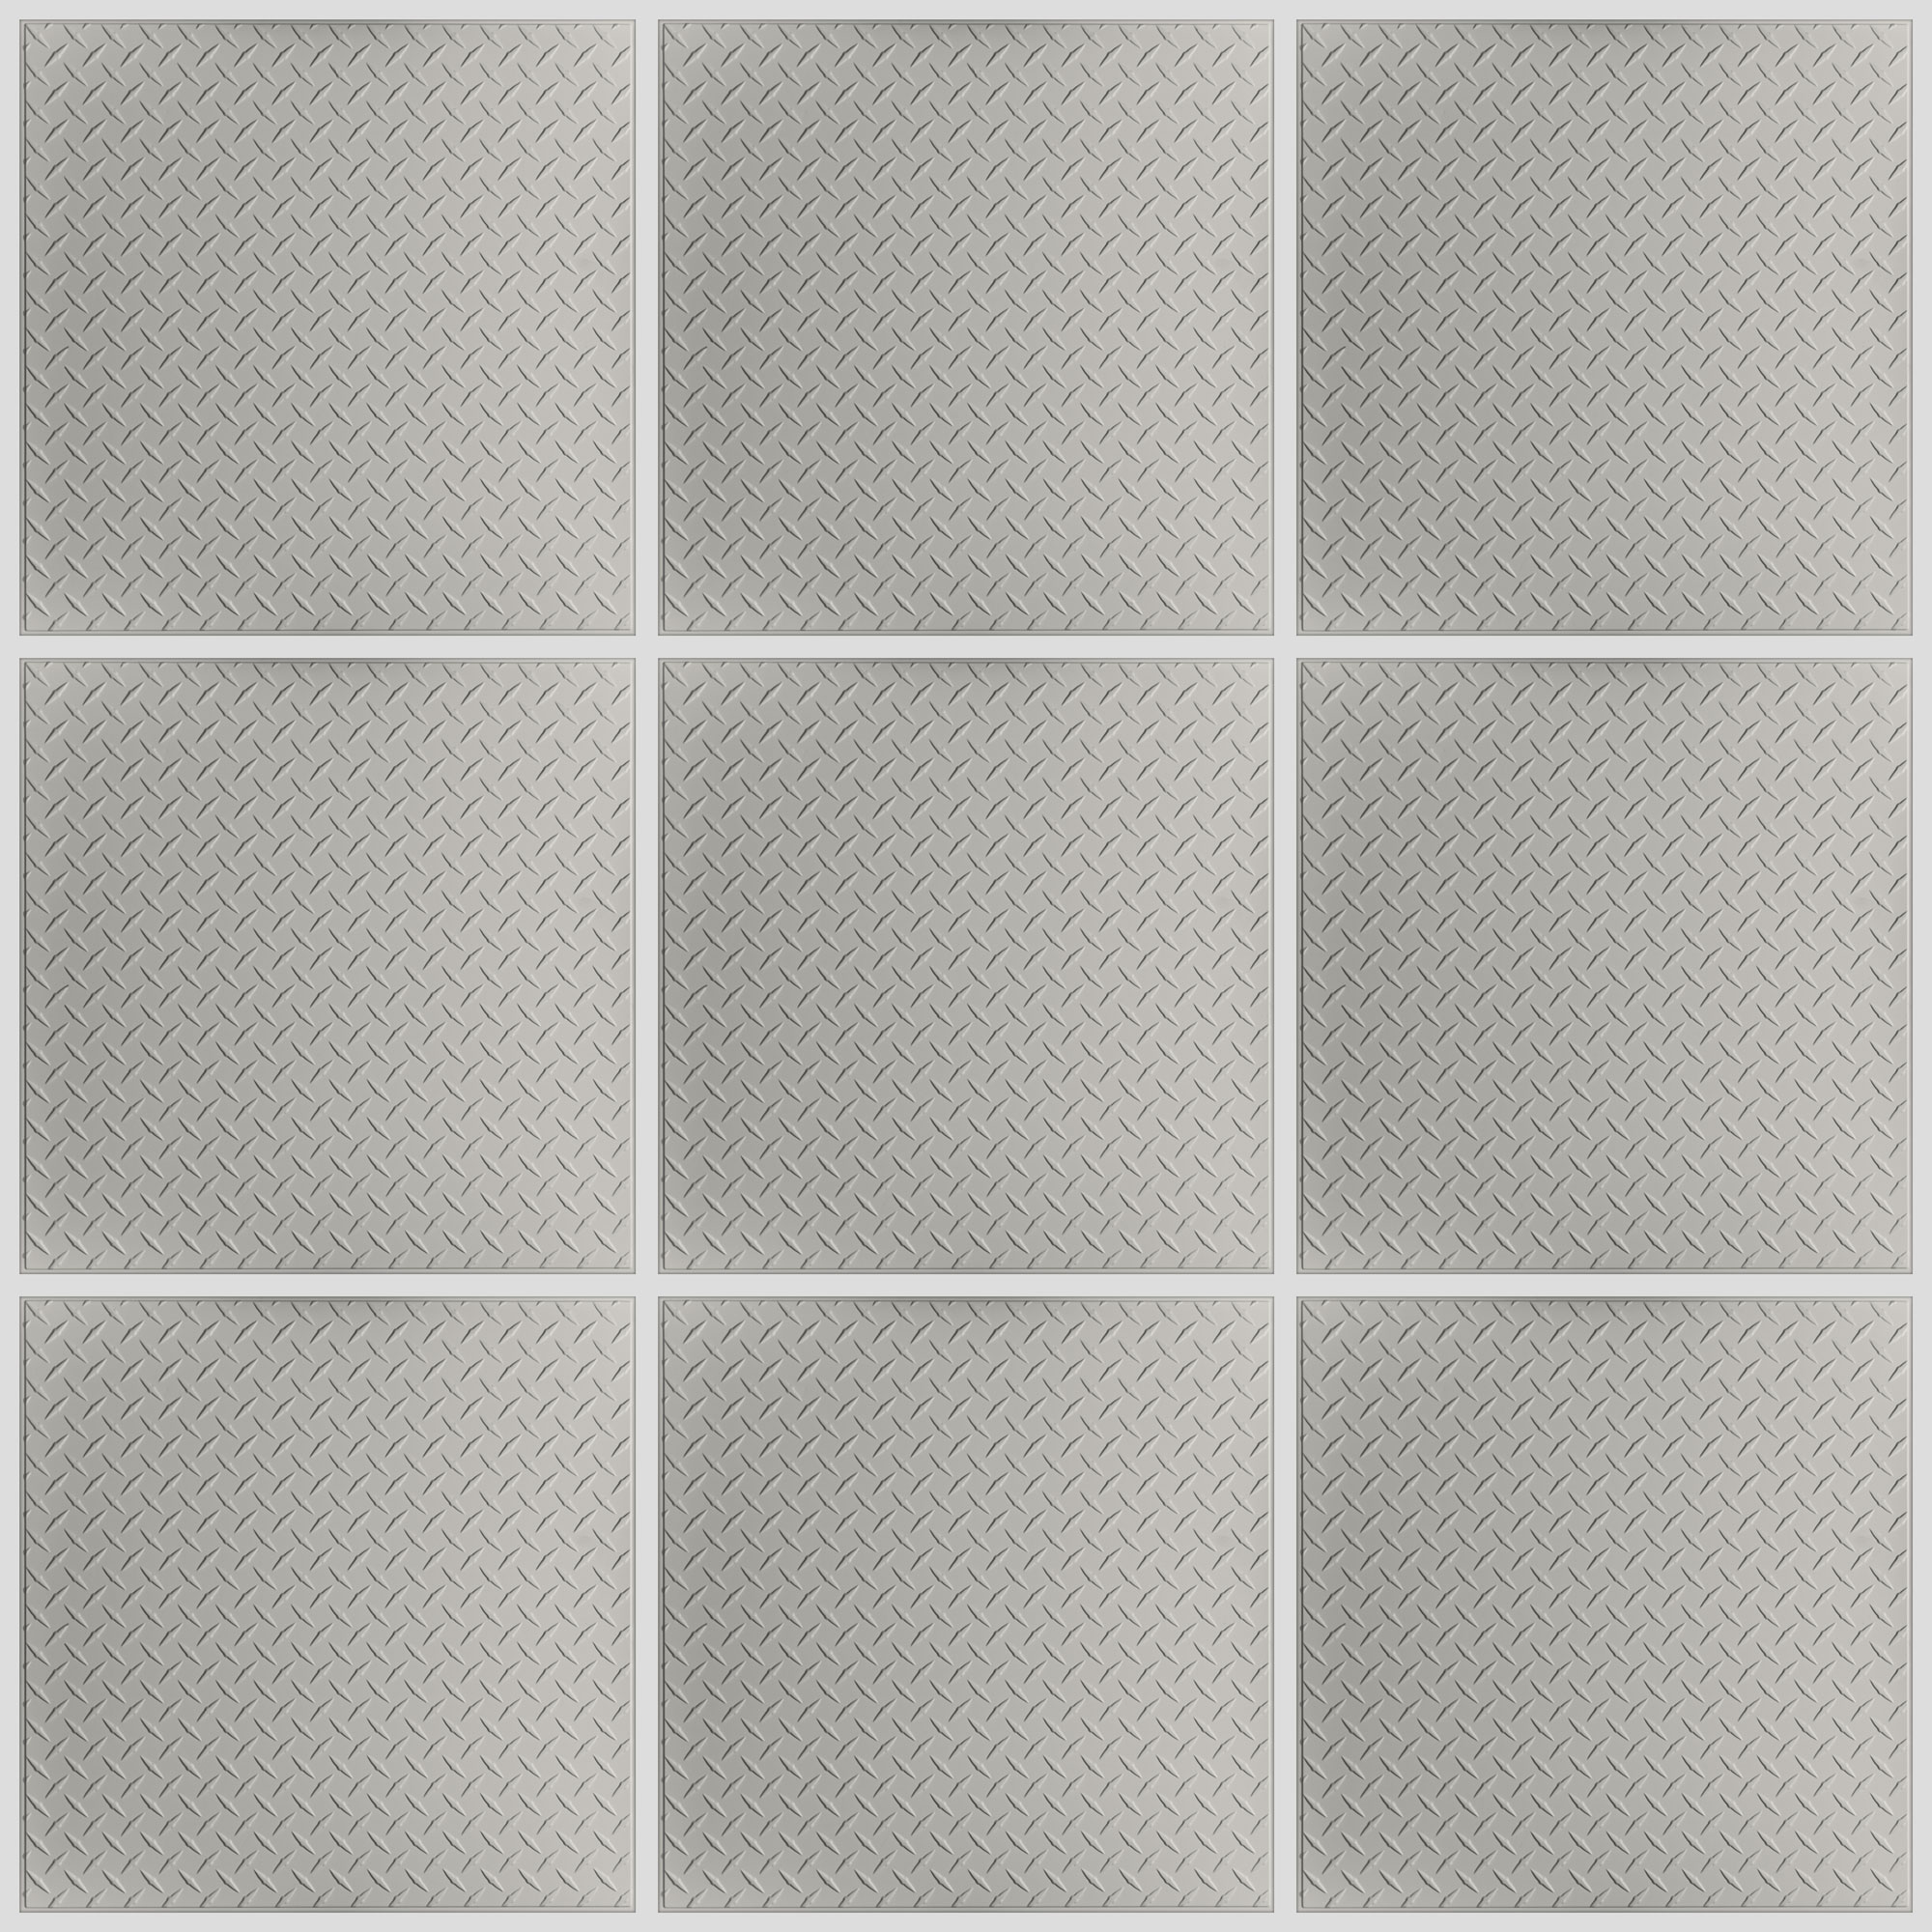 Diamond Plate Ceiling Tiles